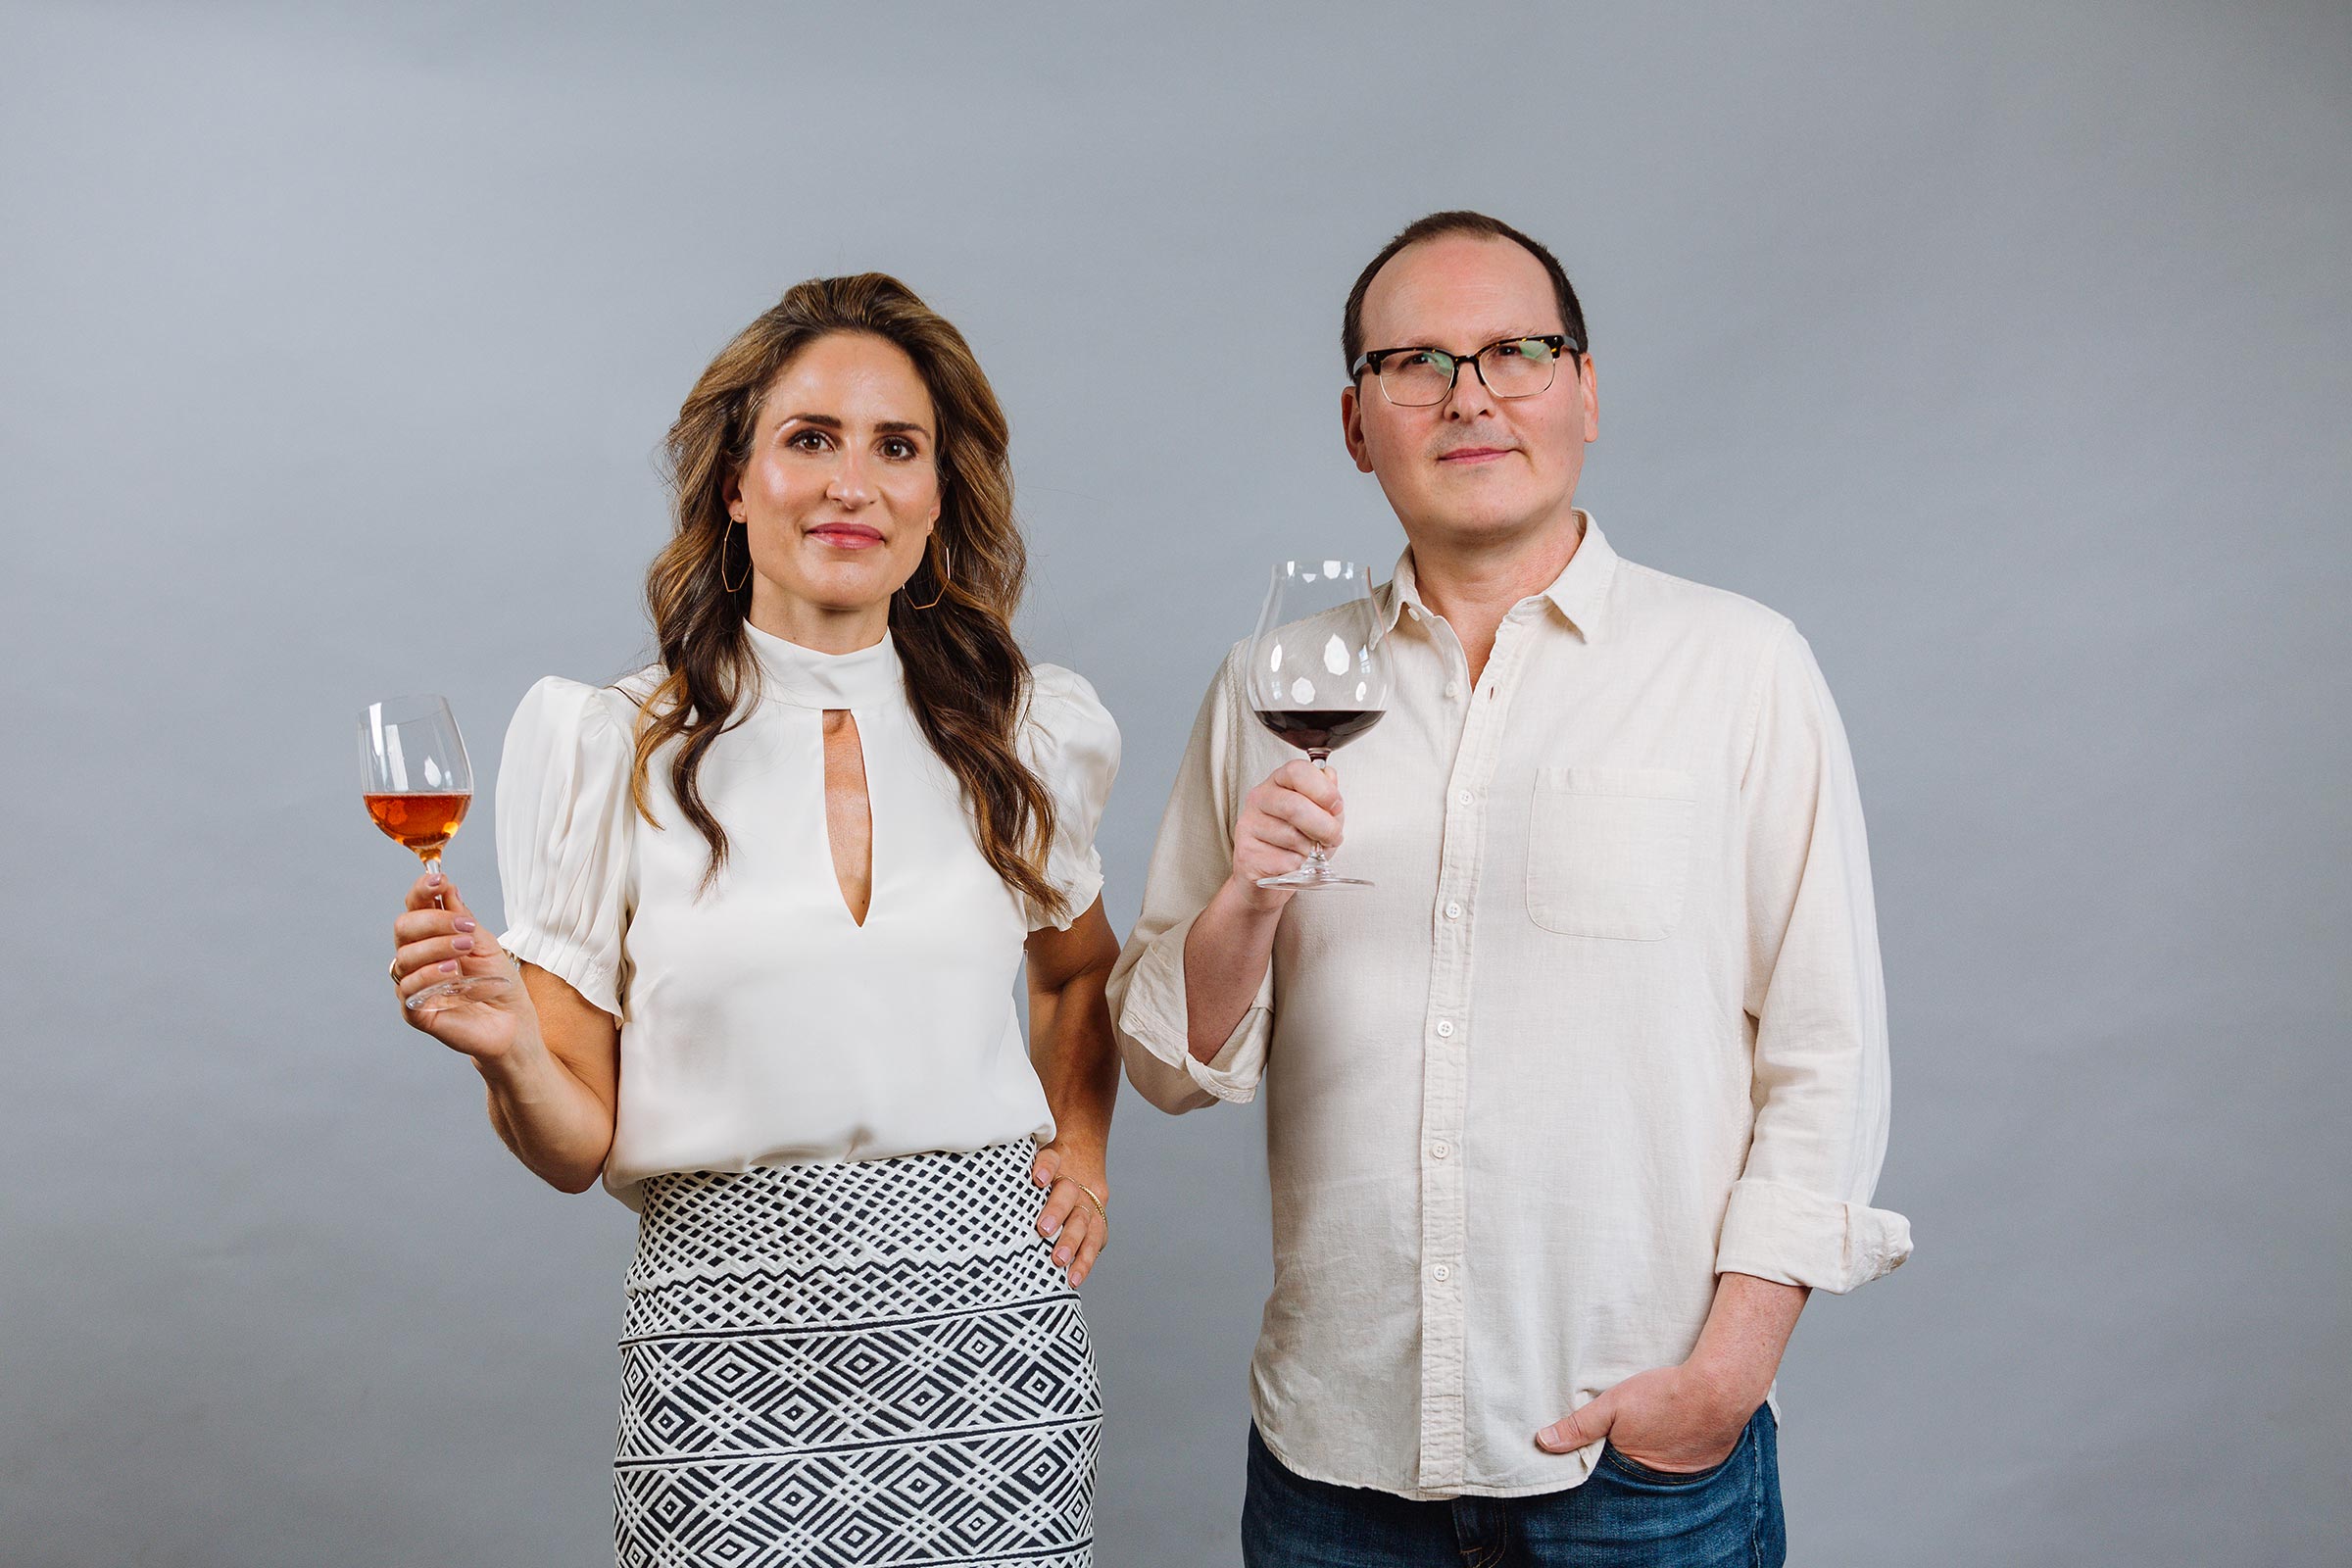 Katherine and Jon holding wine glasses